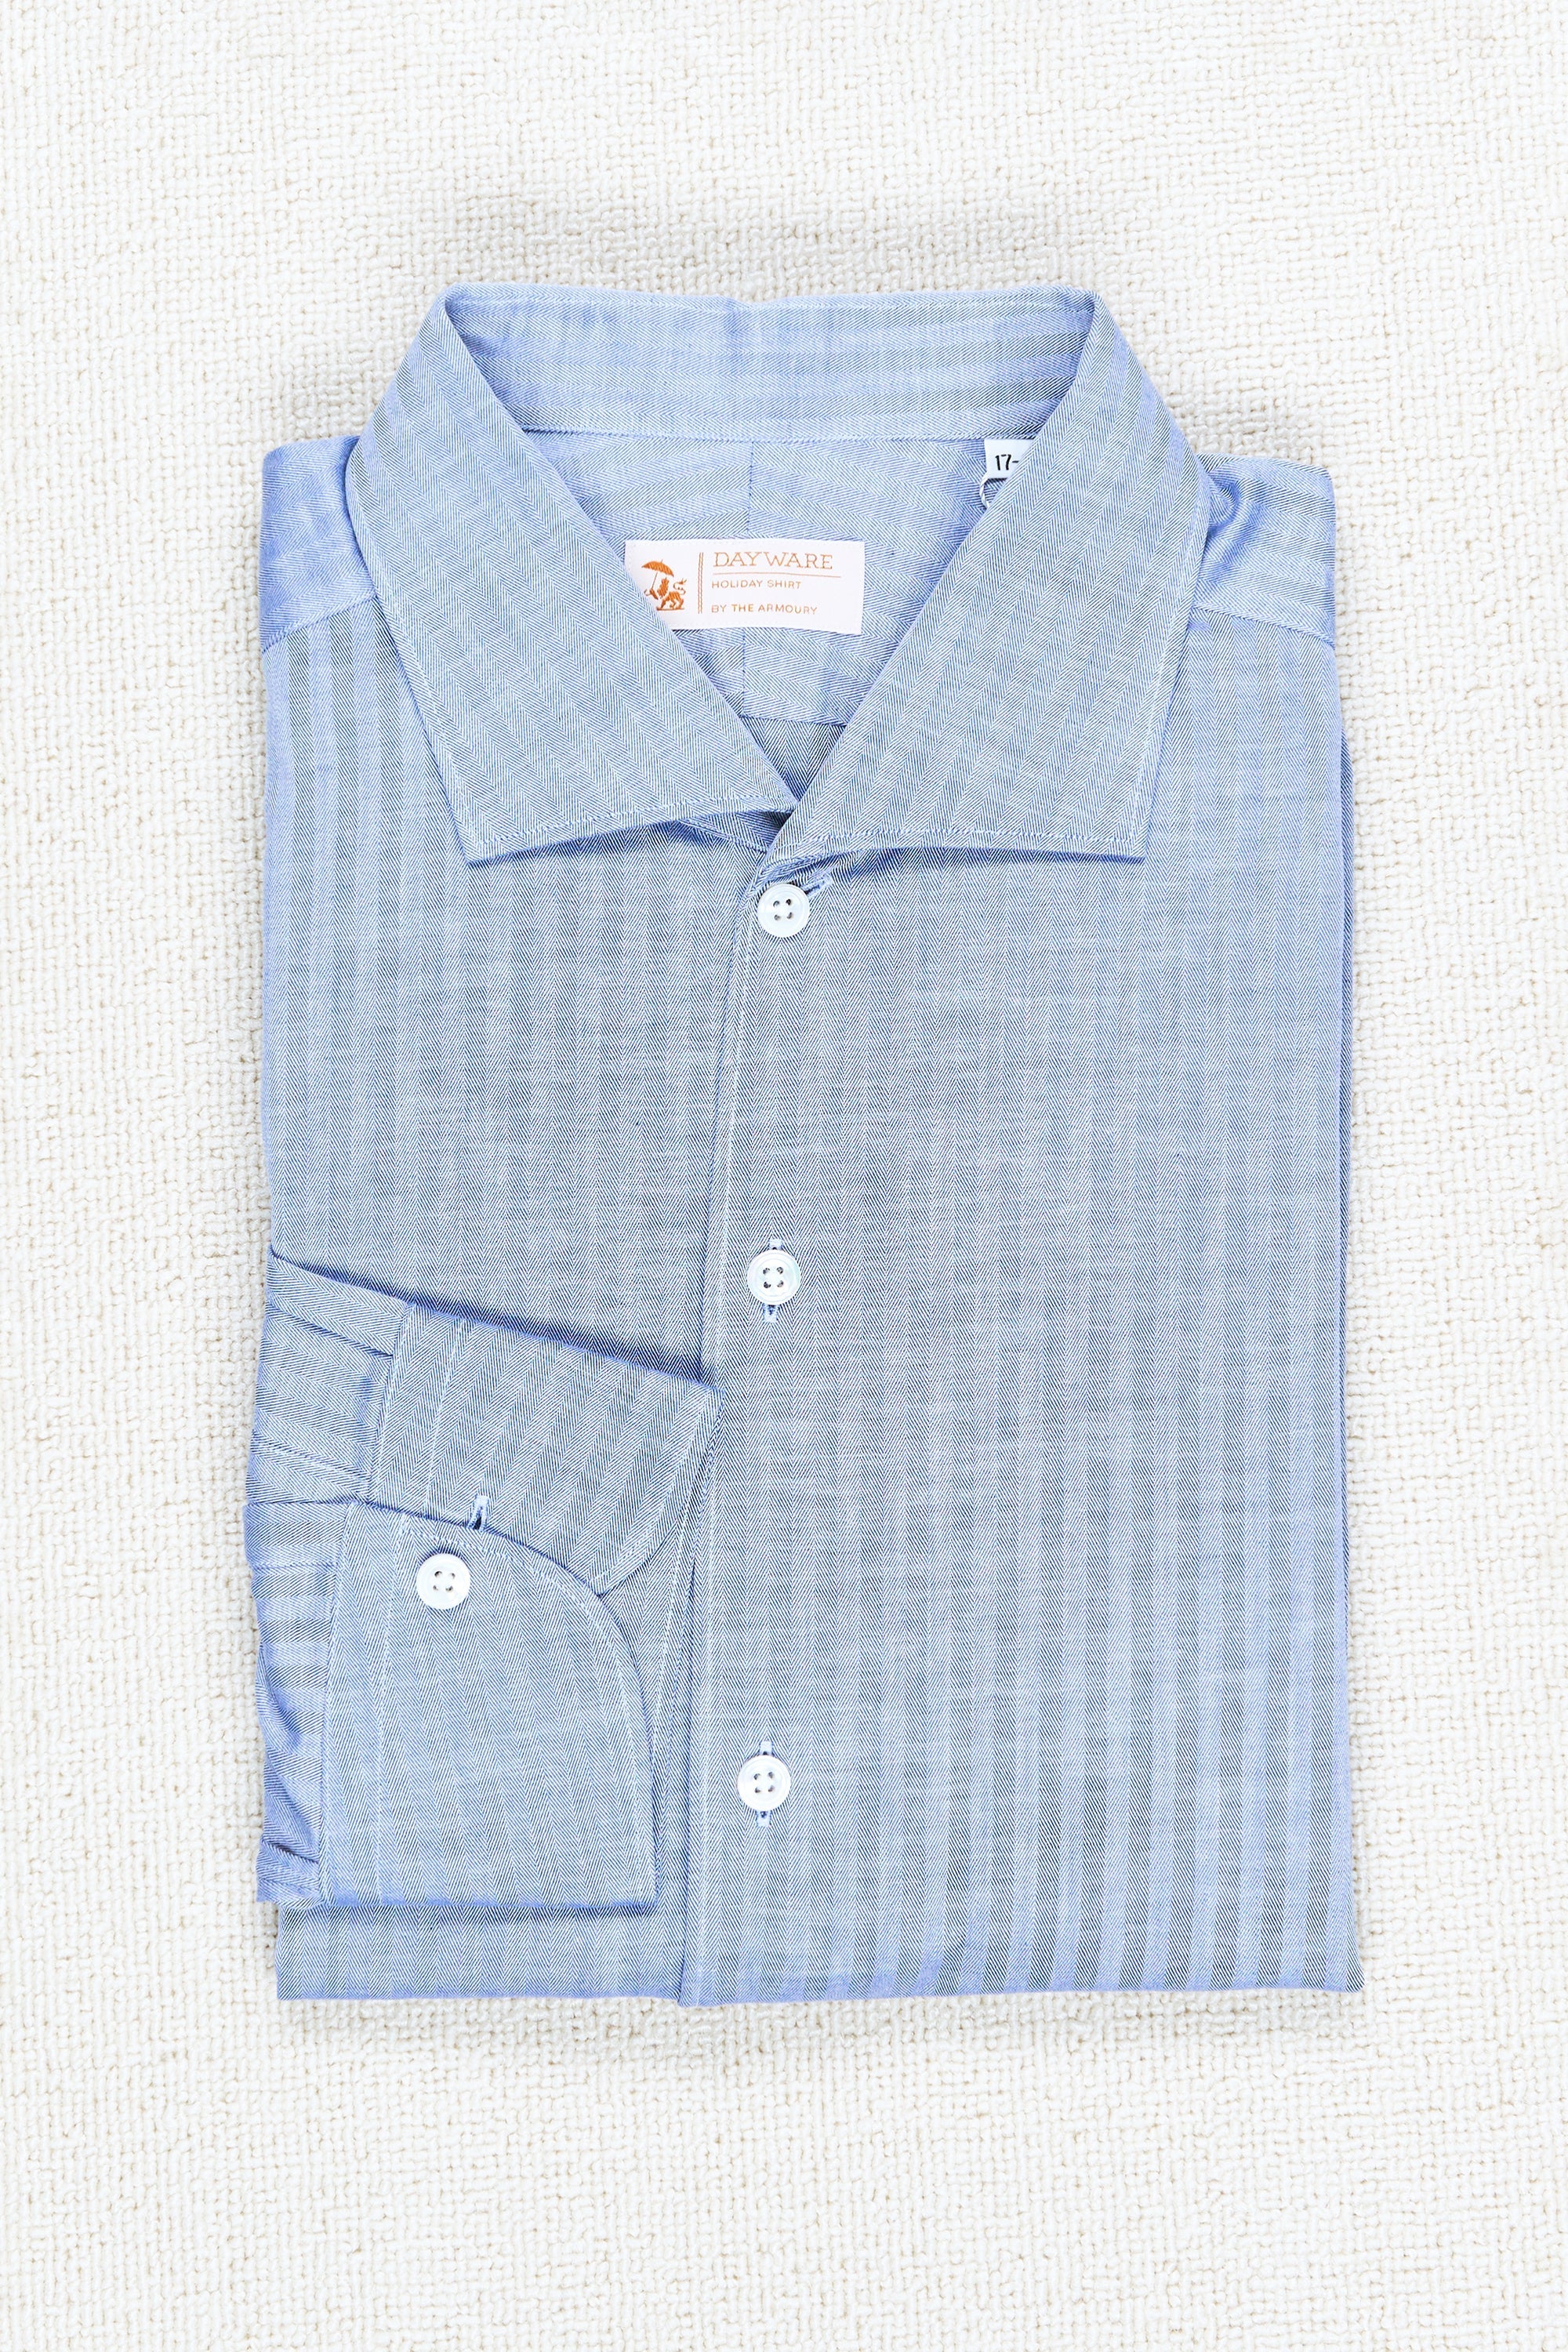 The Armoury Blue Herringbone Cotton Holiday Shirt